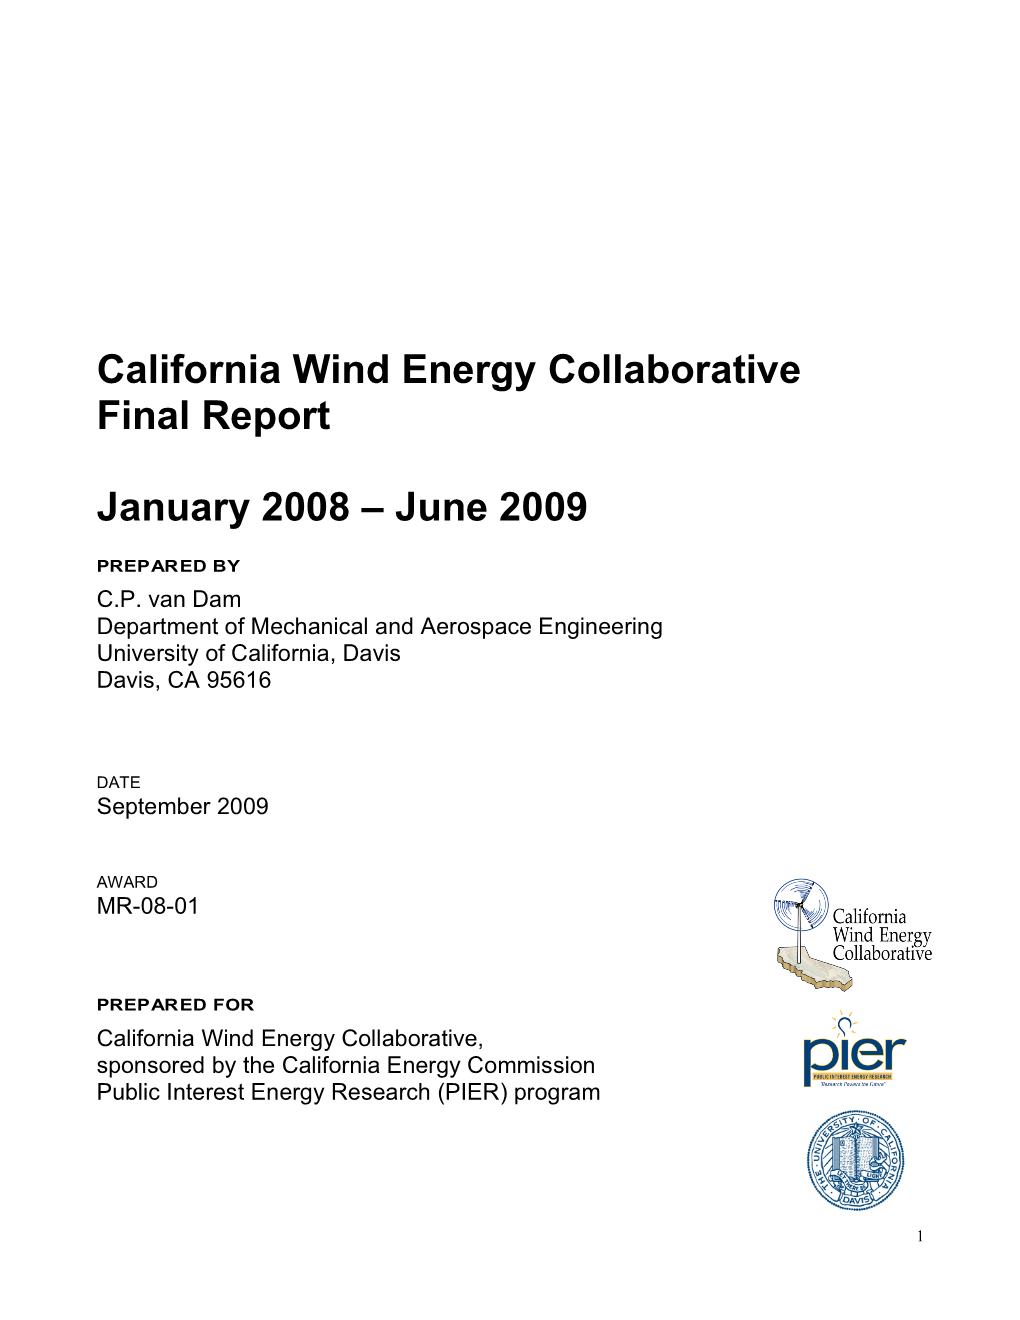 California Wind Energy Collaborative Final Report January 2008 – June